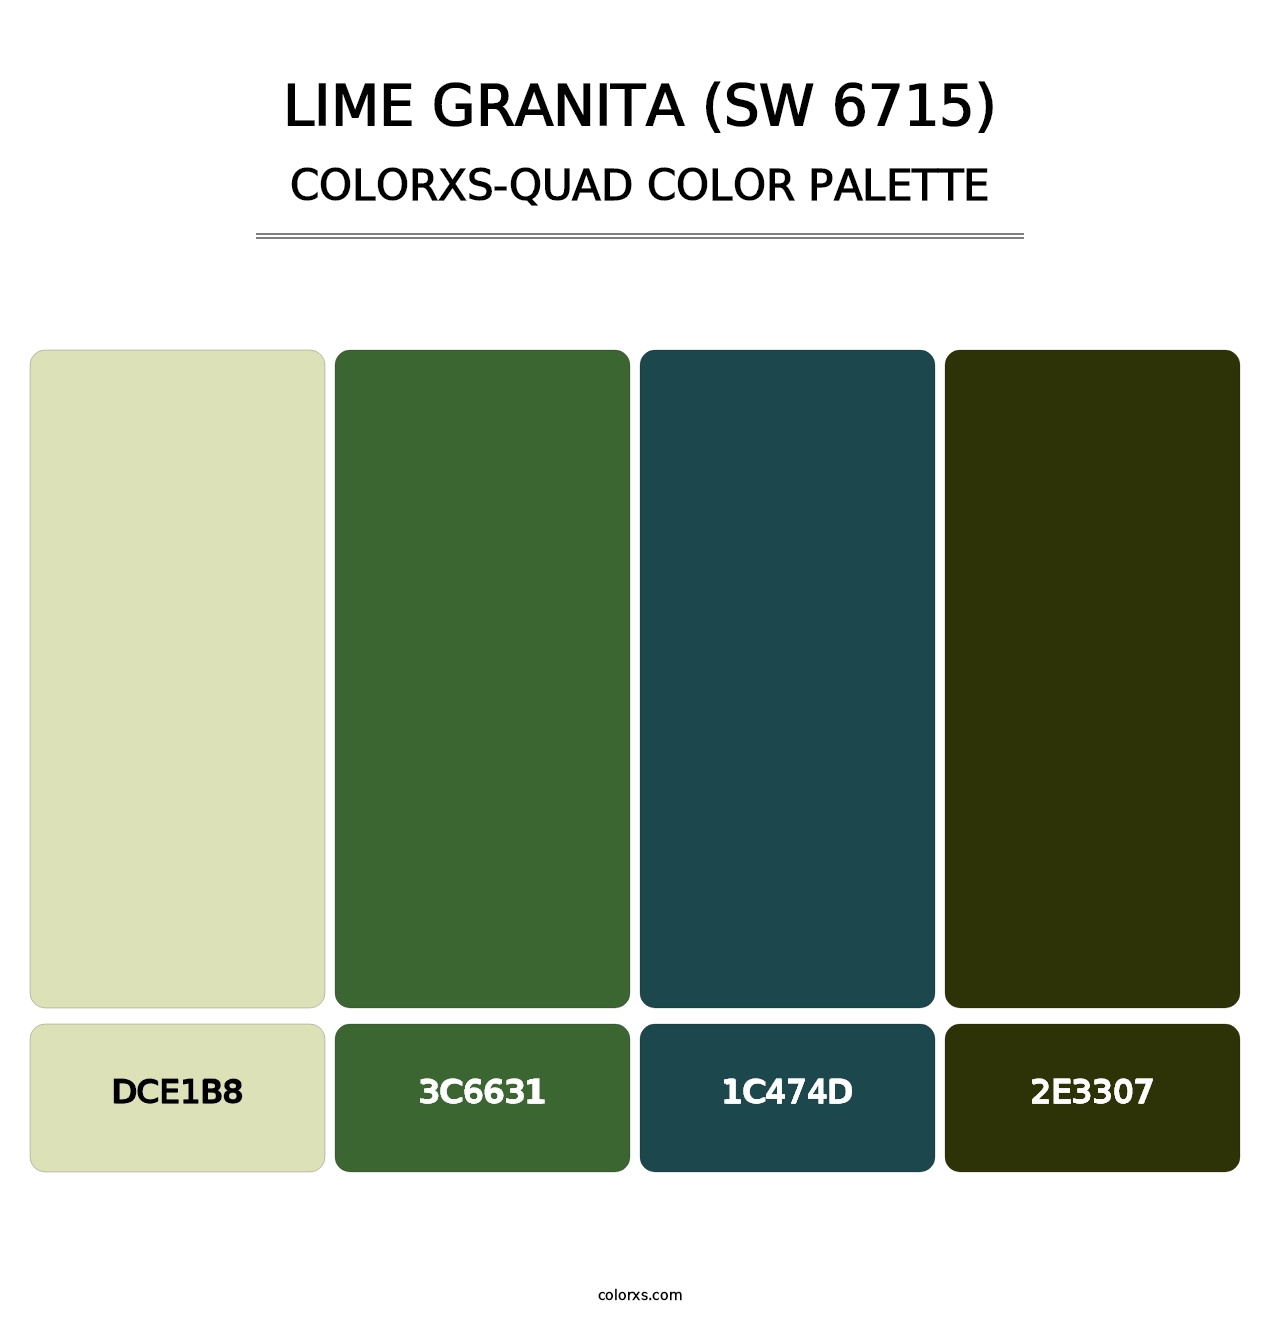 Lime Granita (SW 6715) - Colorxs Quad Palette